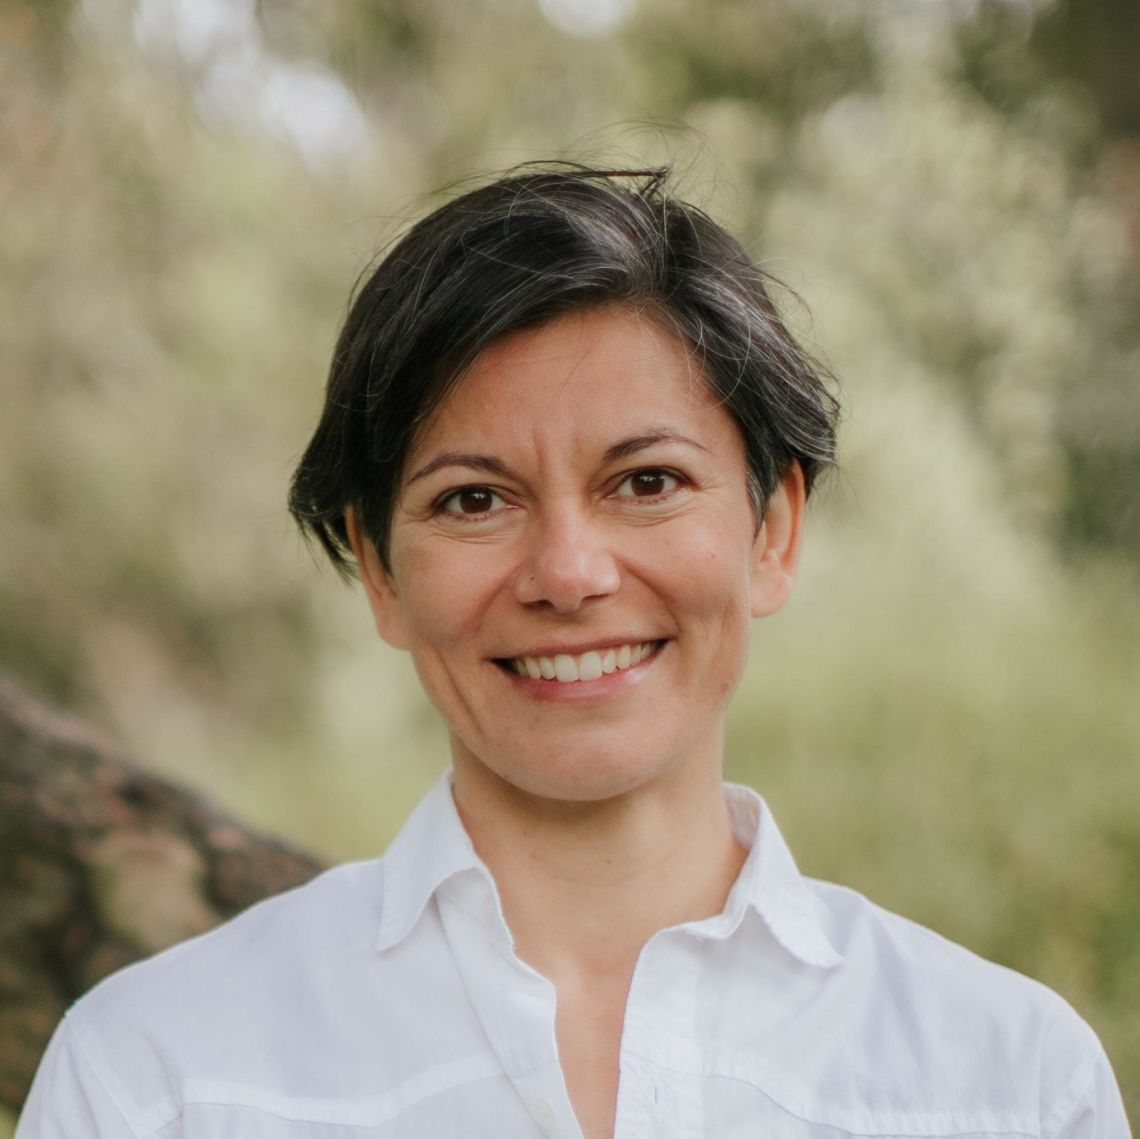 Associate Professor Angeliki Kerasidou